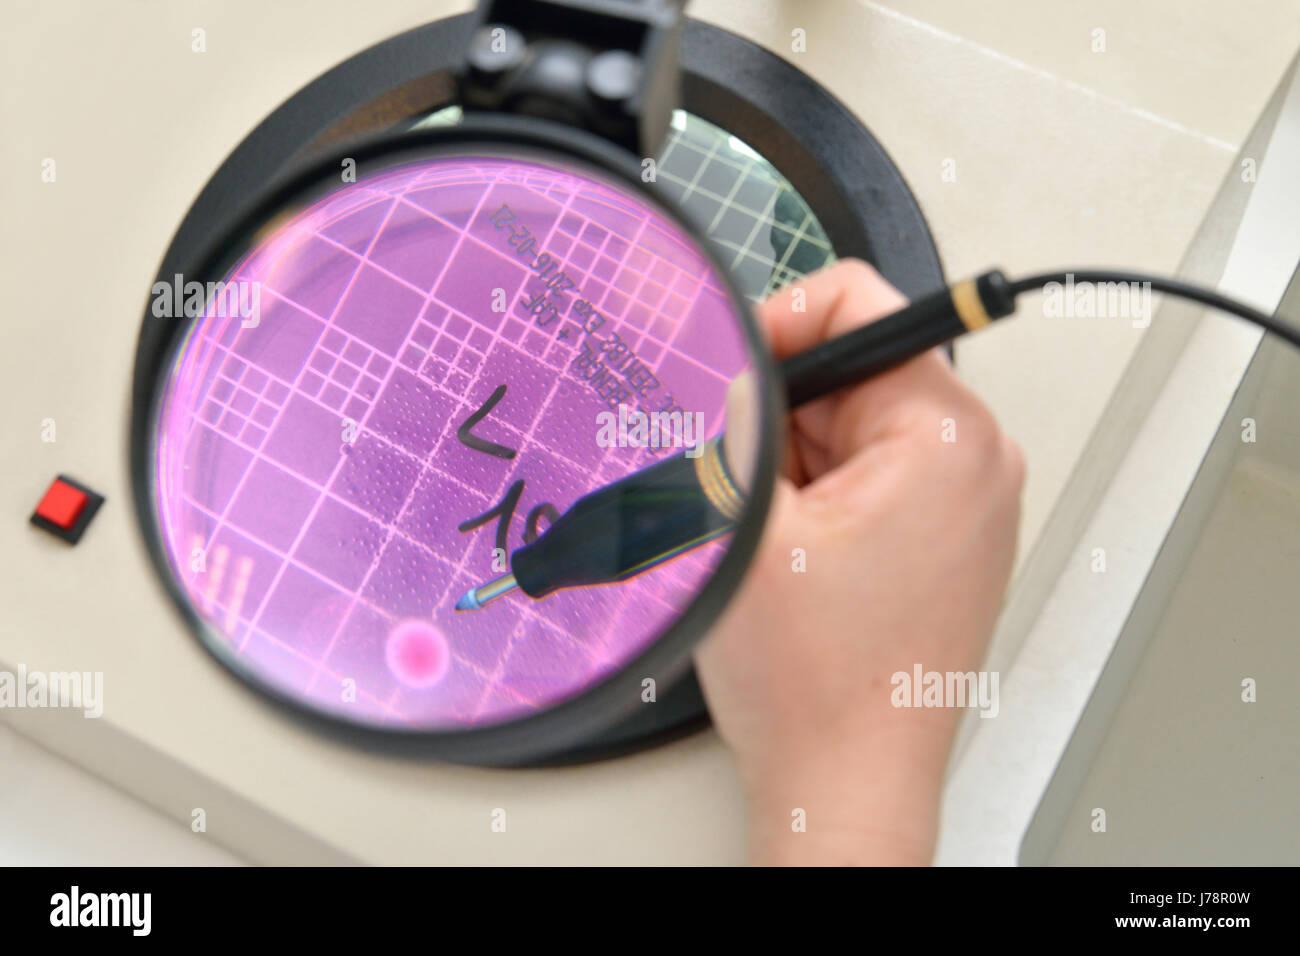 Scientist hand Scraping Petri Dish magnifier lens Stock Photo